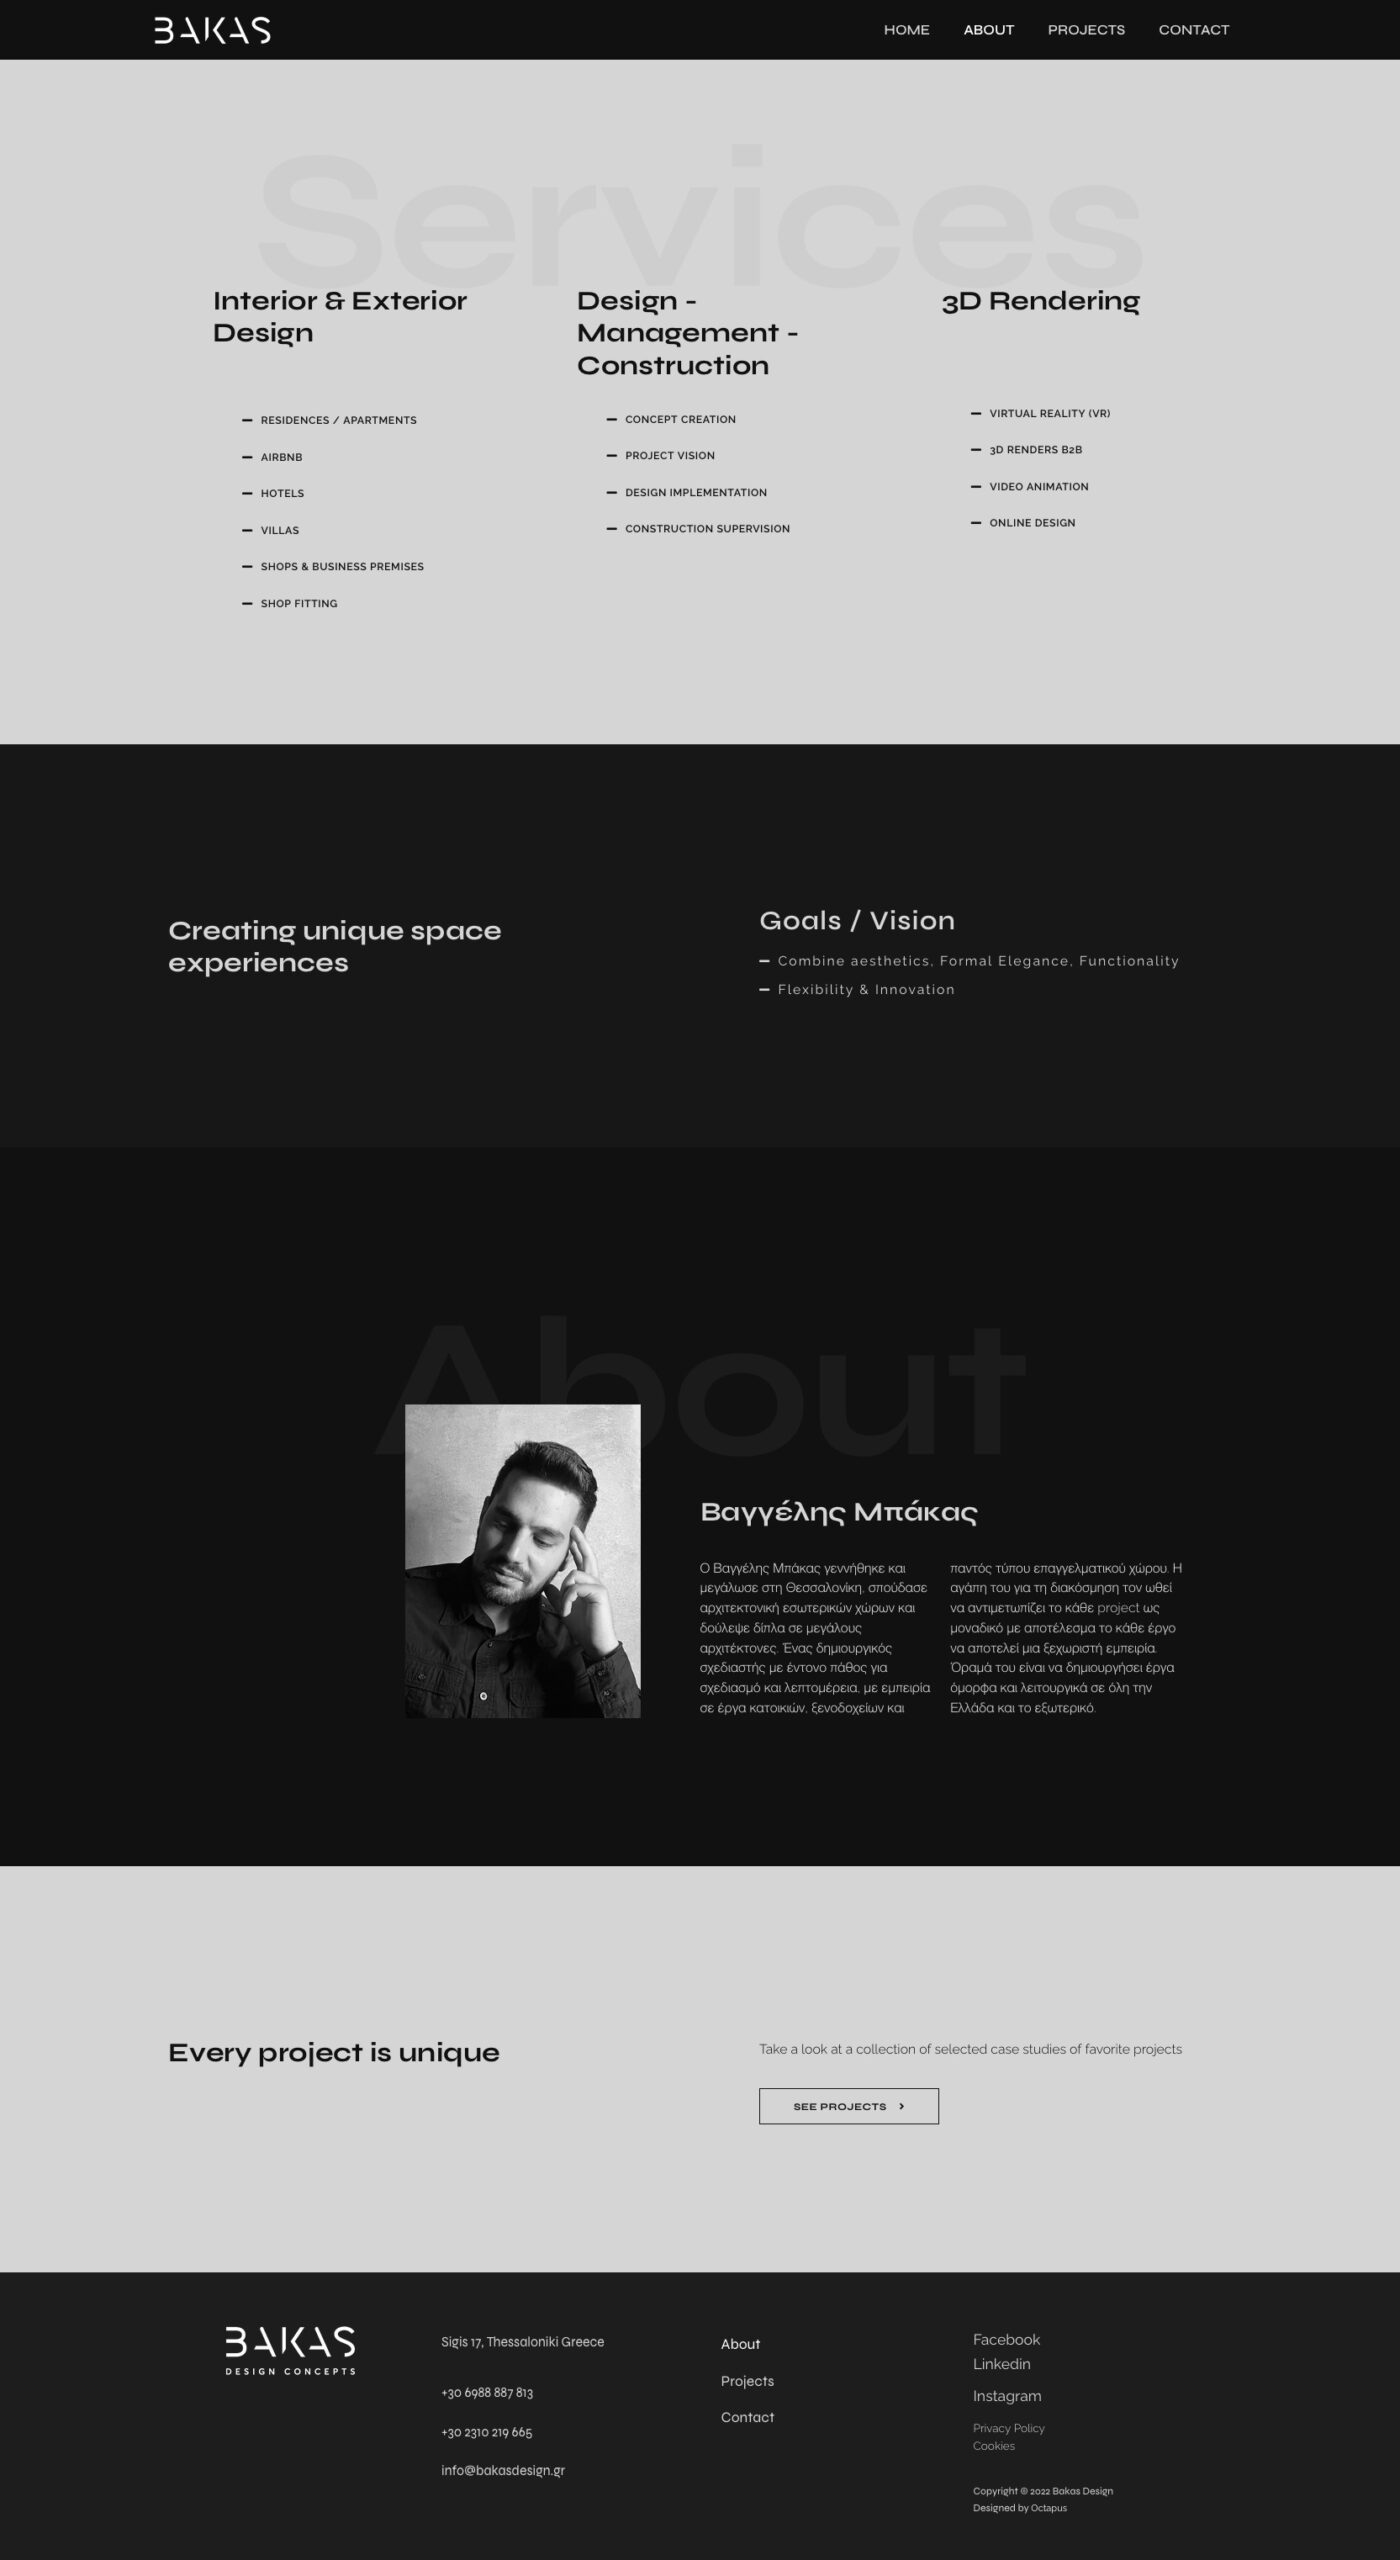 Bakas Design - About Page